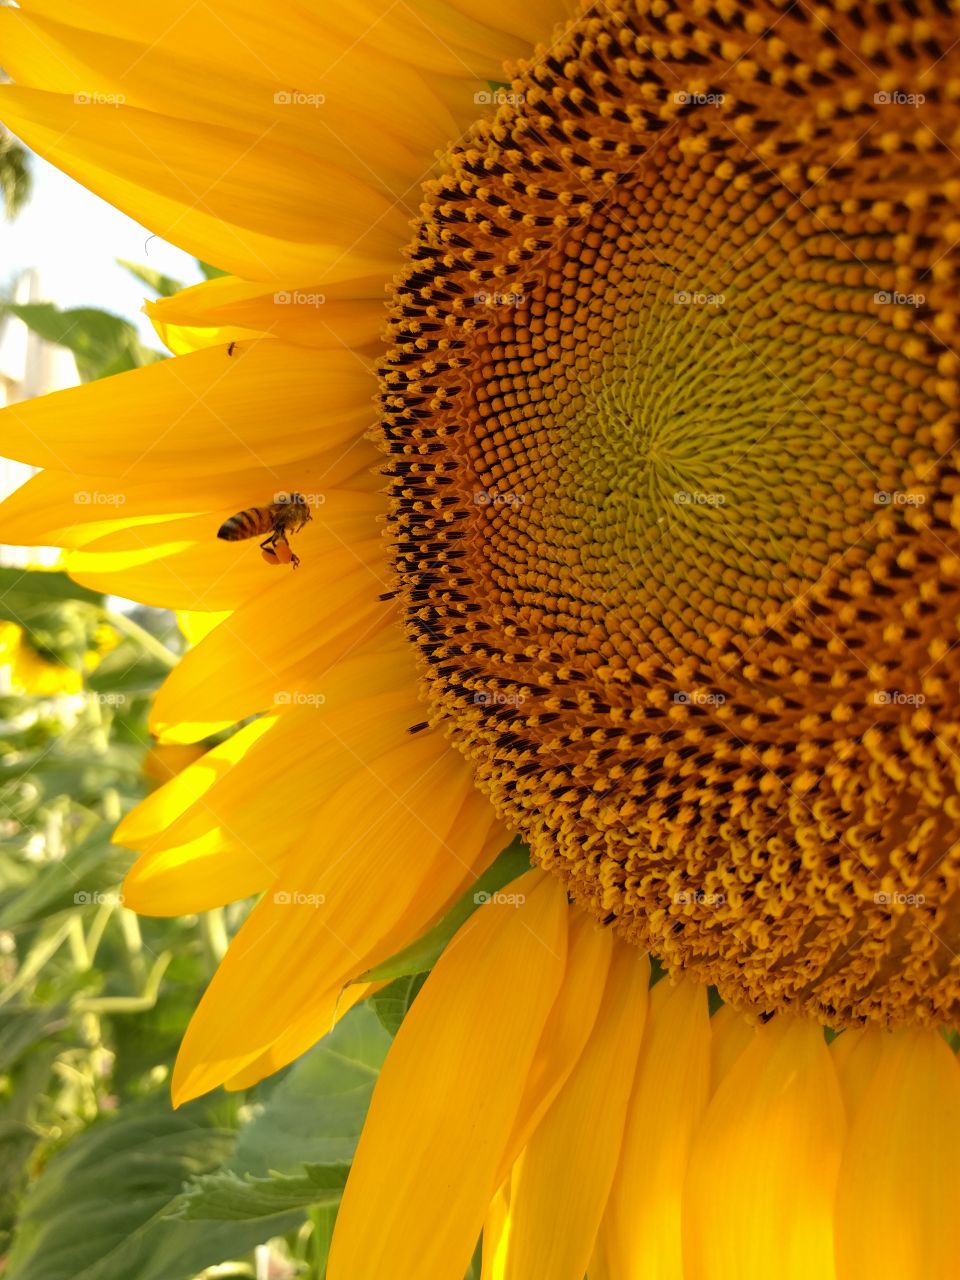 Bee flying near sunflower